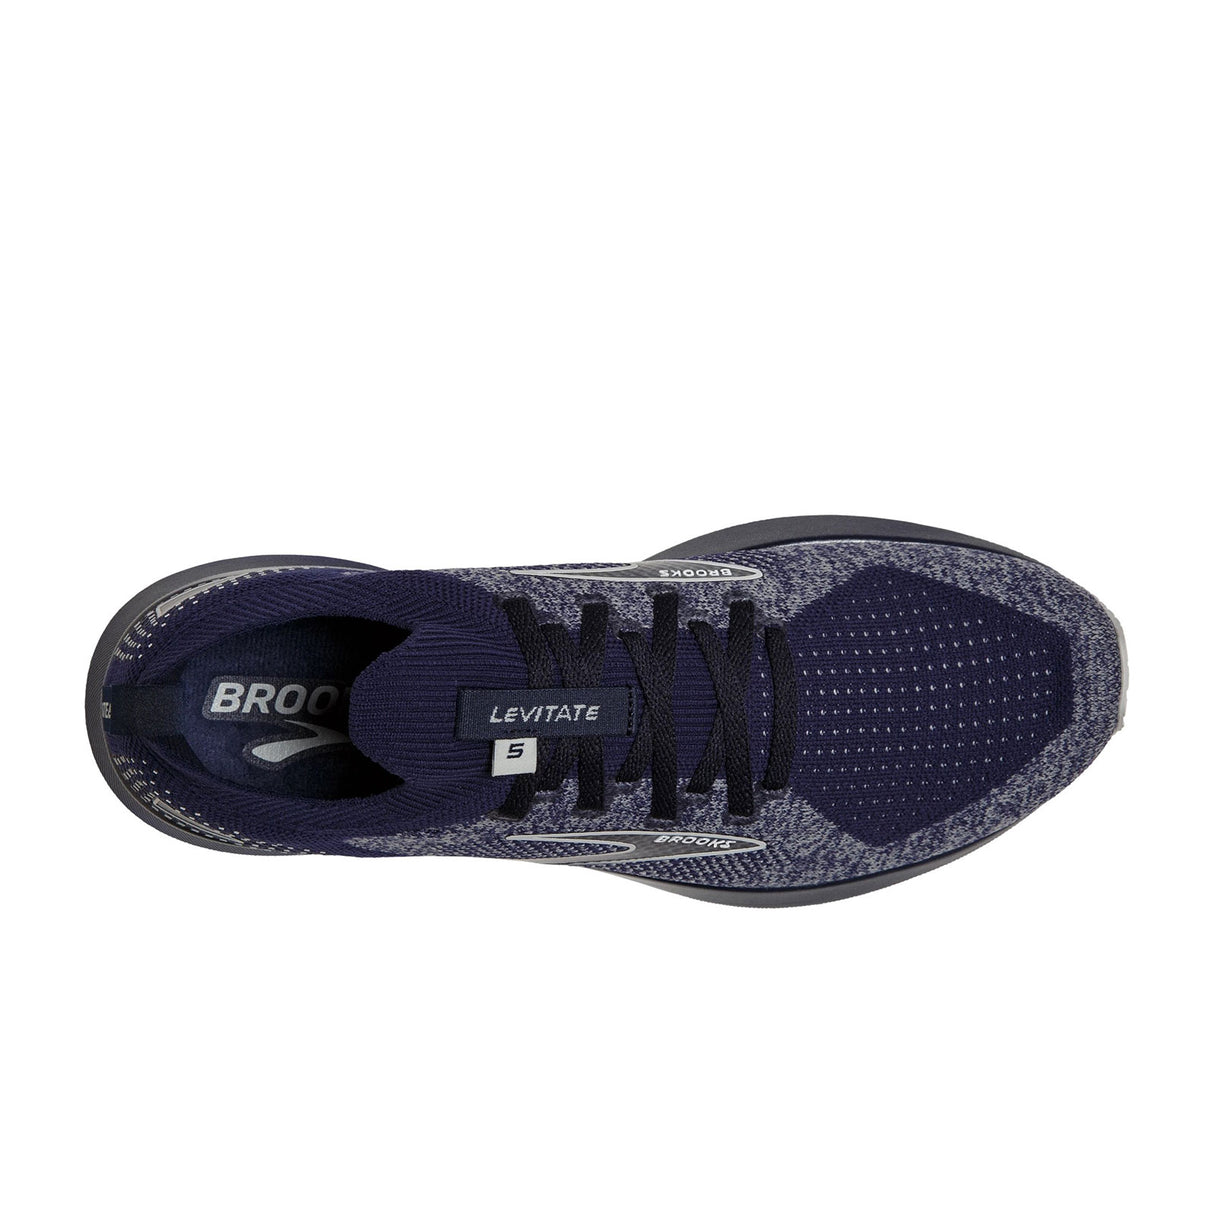 Brooks Levitate Stealthfit 5 Running Shoe (Men) - Peacoat/Grey Athletic - Running - Cushion - The Heel Shoe Fitters